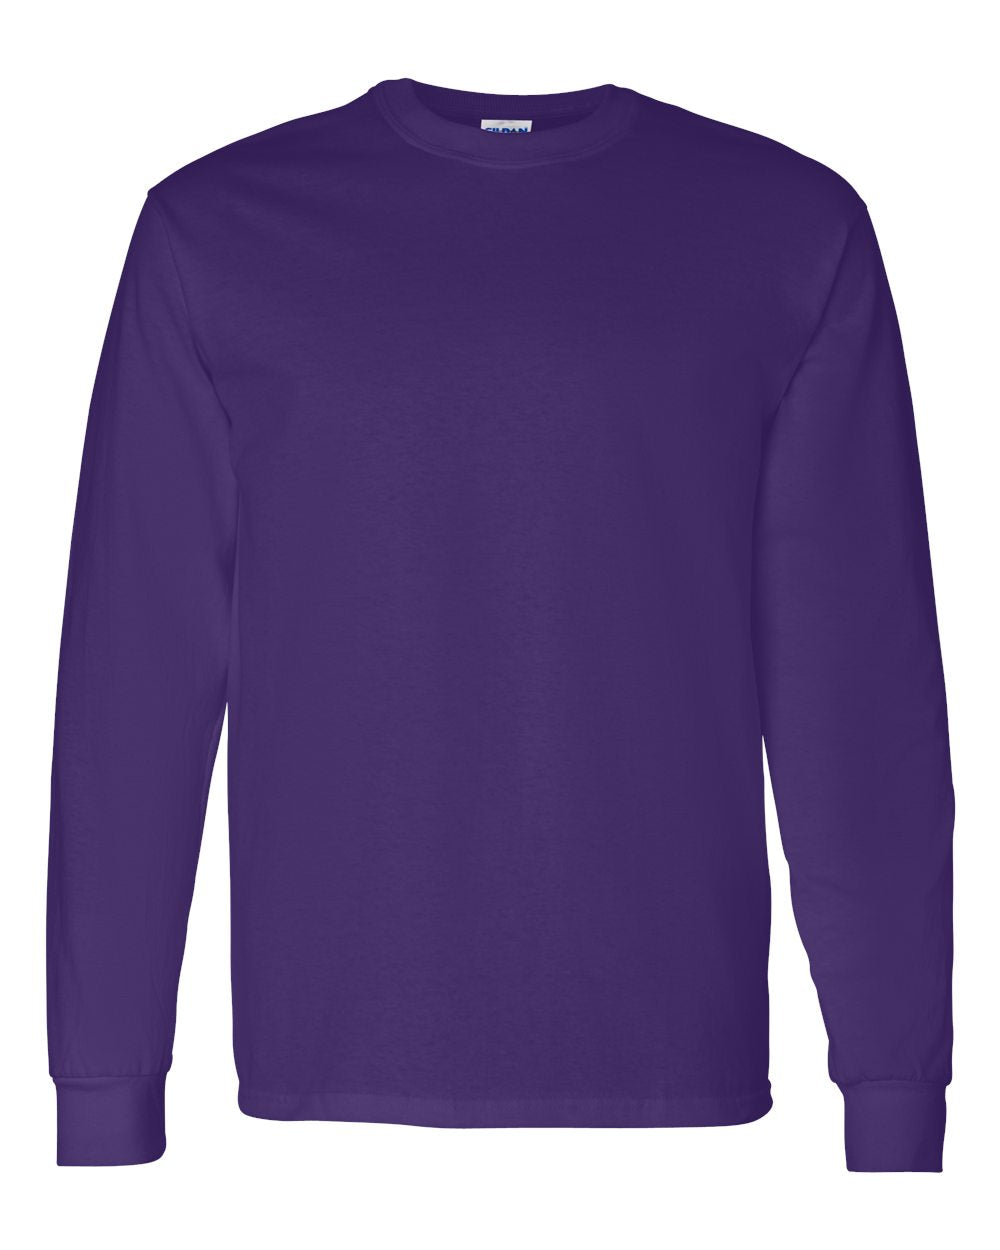 Pretreated Gildan 5400 Heavy Cotton Long Sleeve T-Shirt - Purple